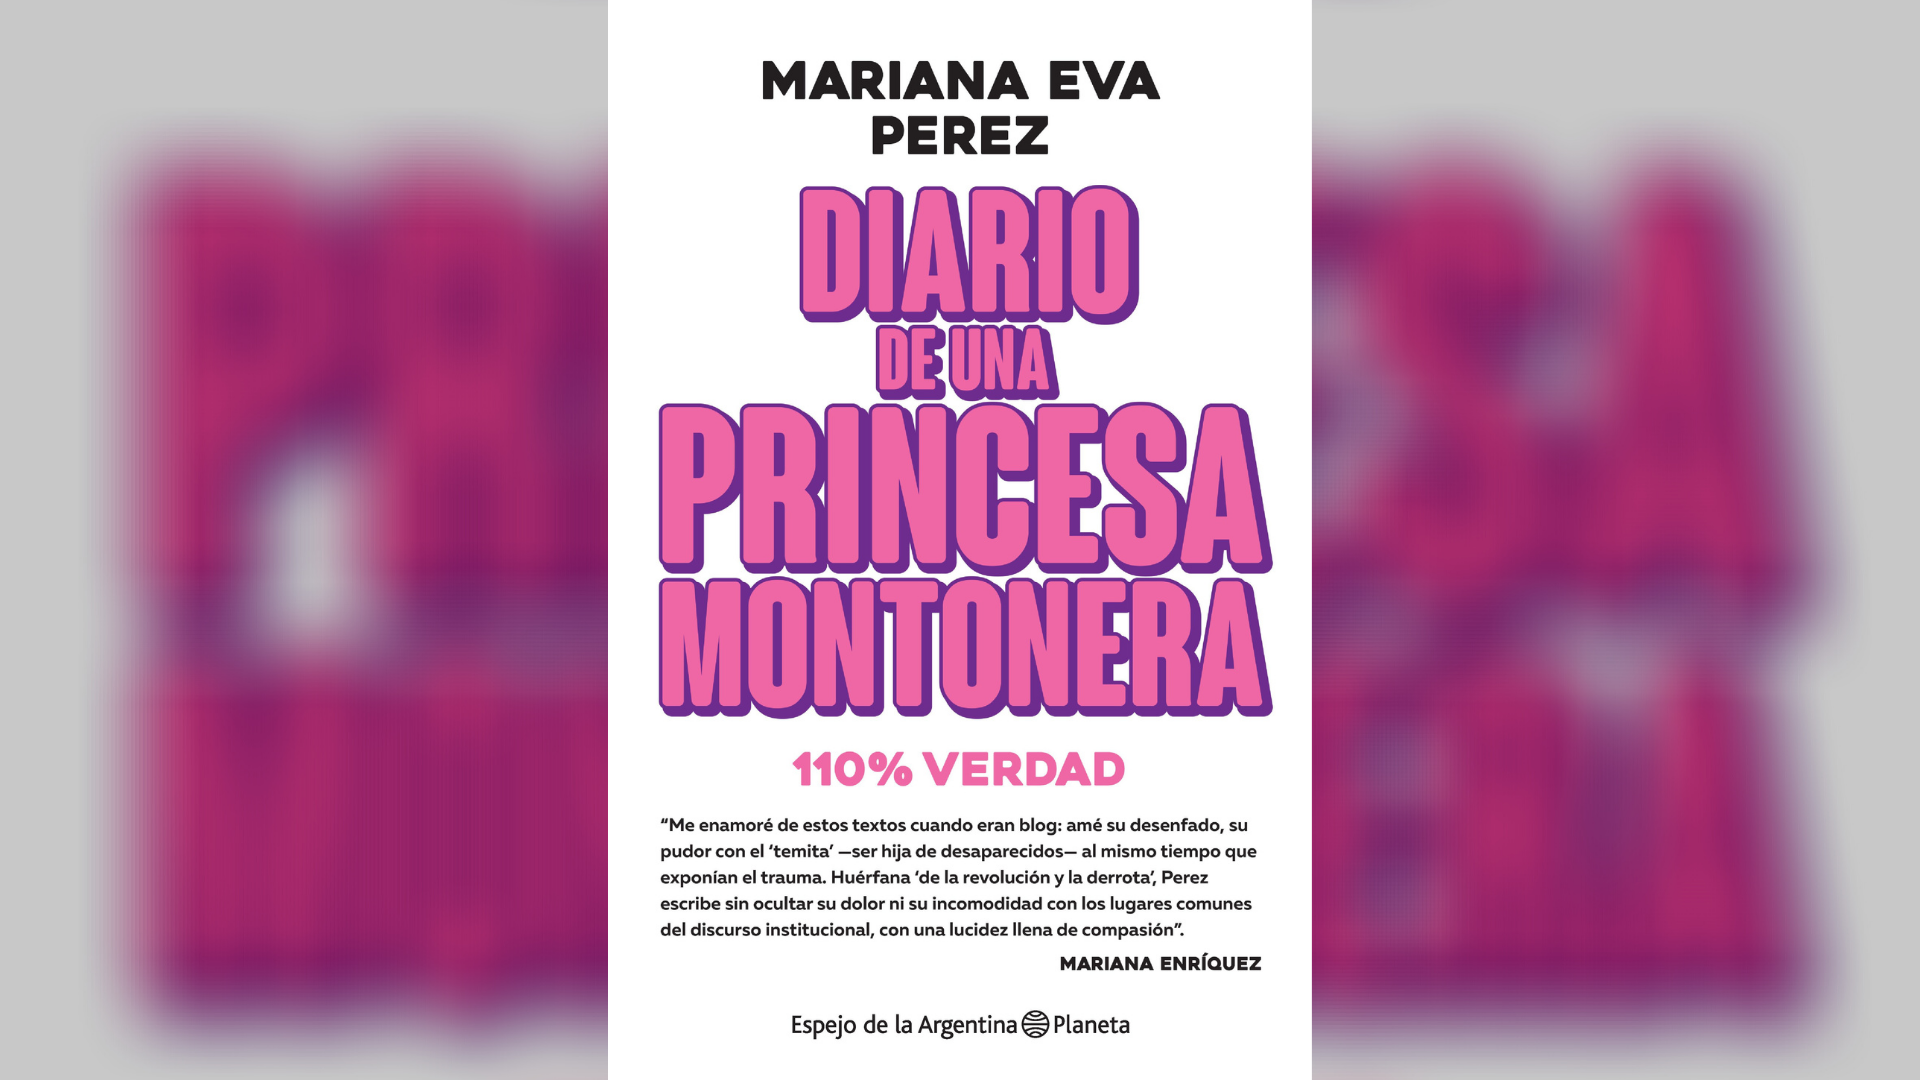 Diario de una princesa montonera, de Mariana Eva Pérez